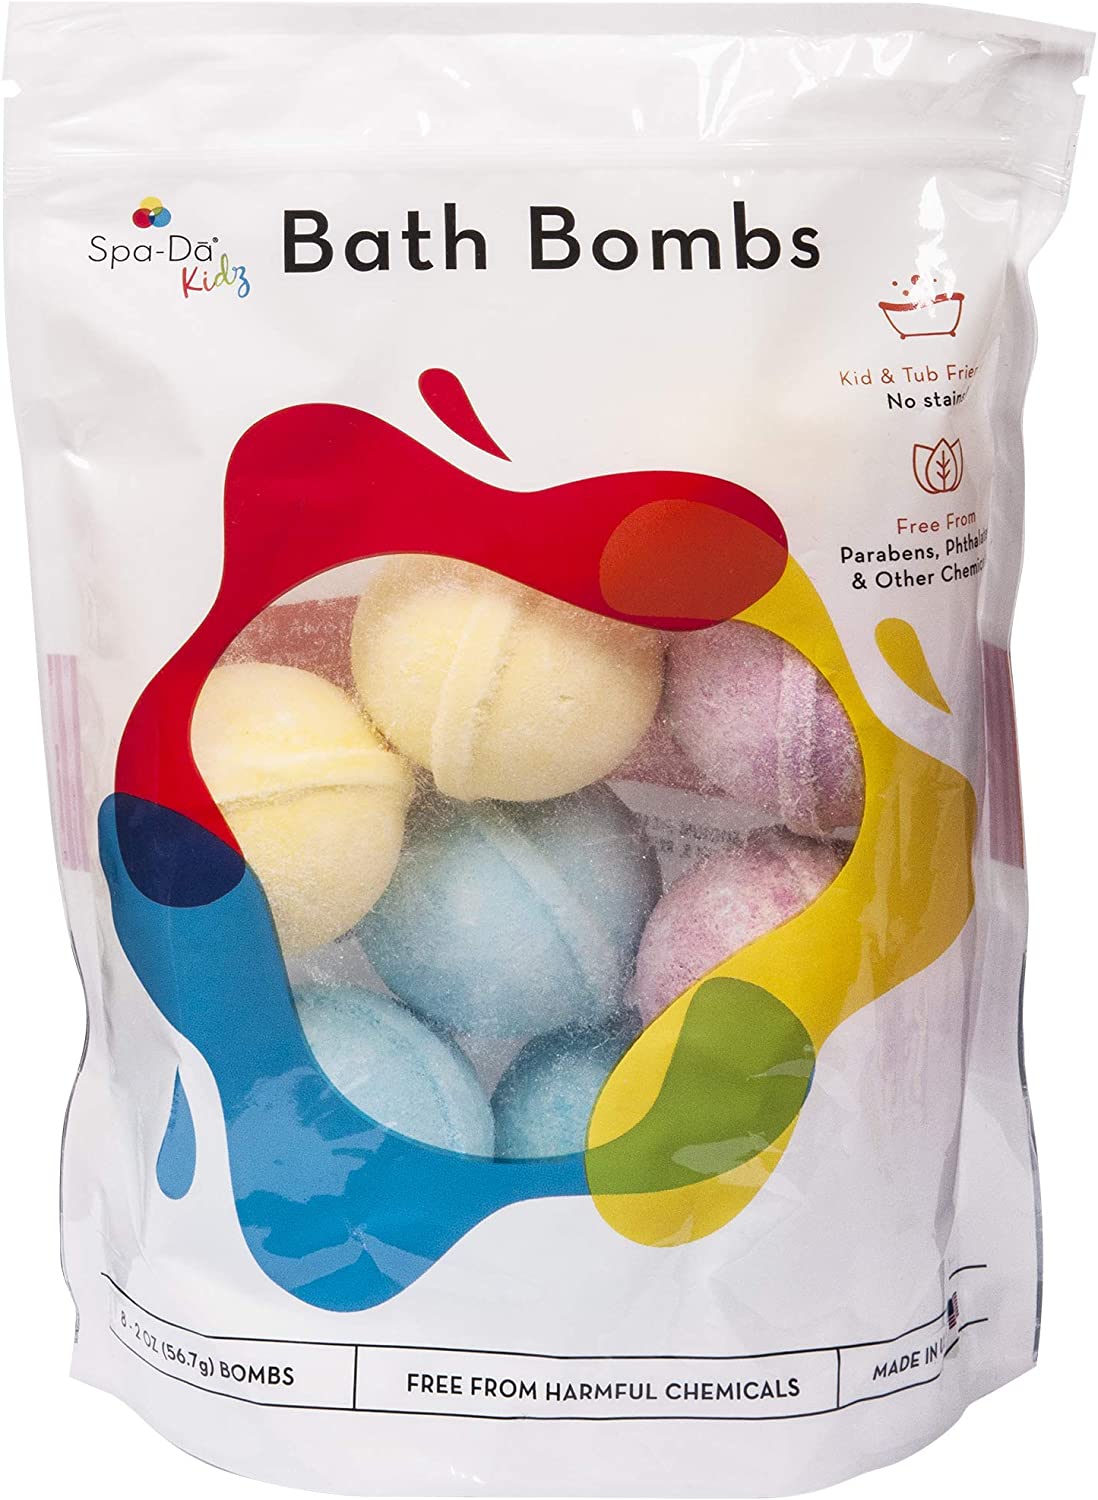 Spa-Da Clean Ingredient Handmade Kids’ Bath Bombs, 8-Count